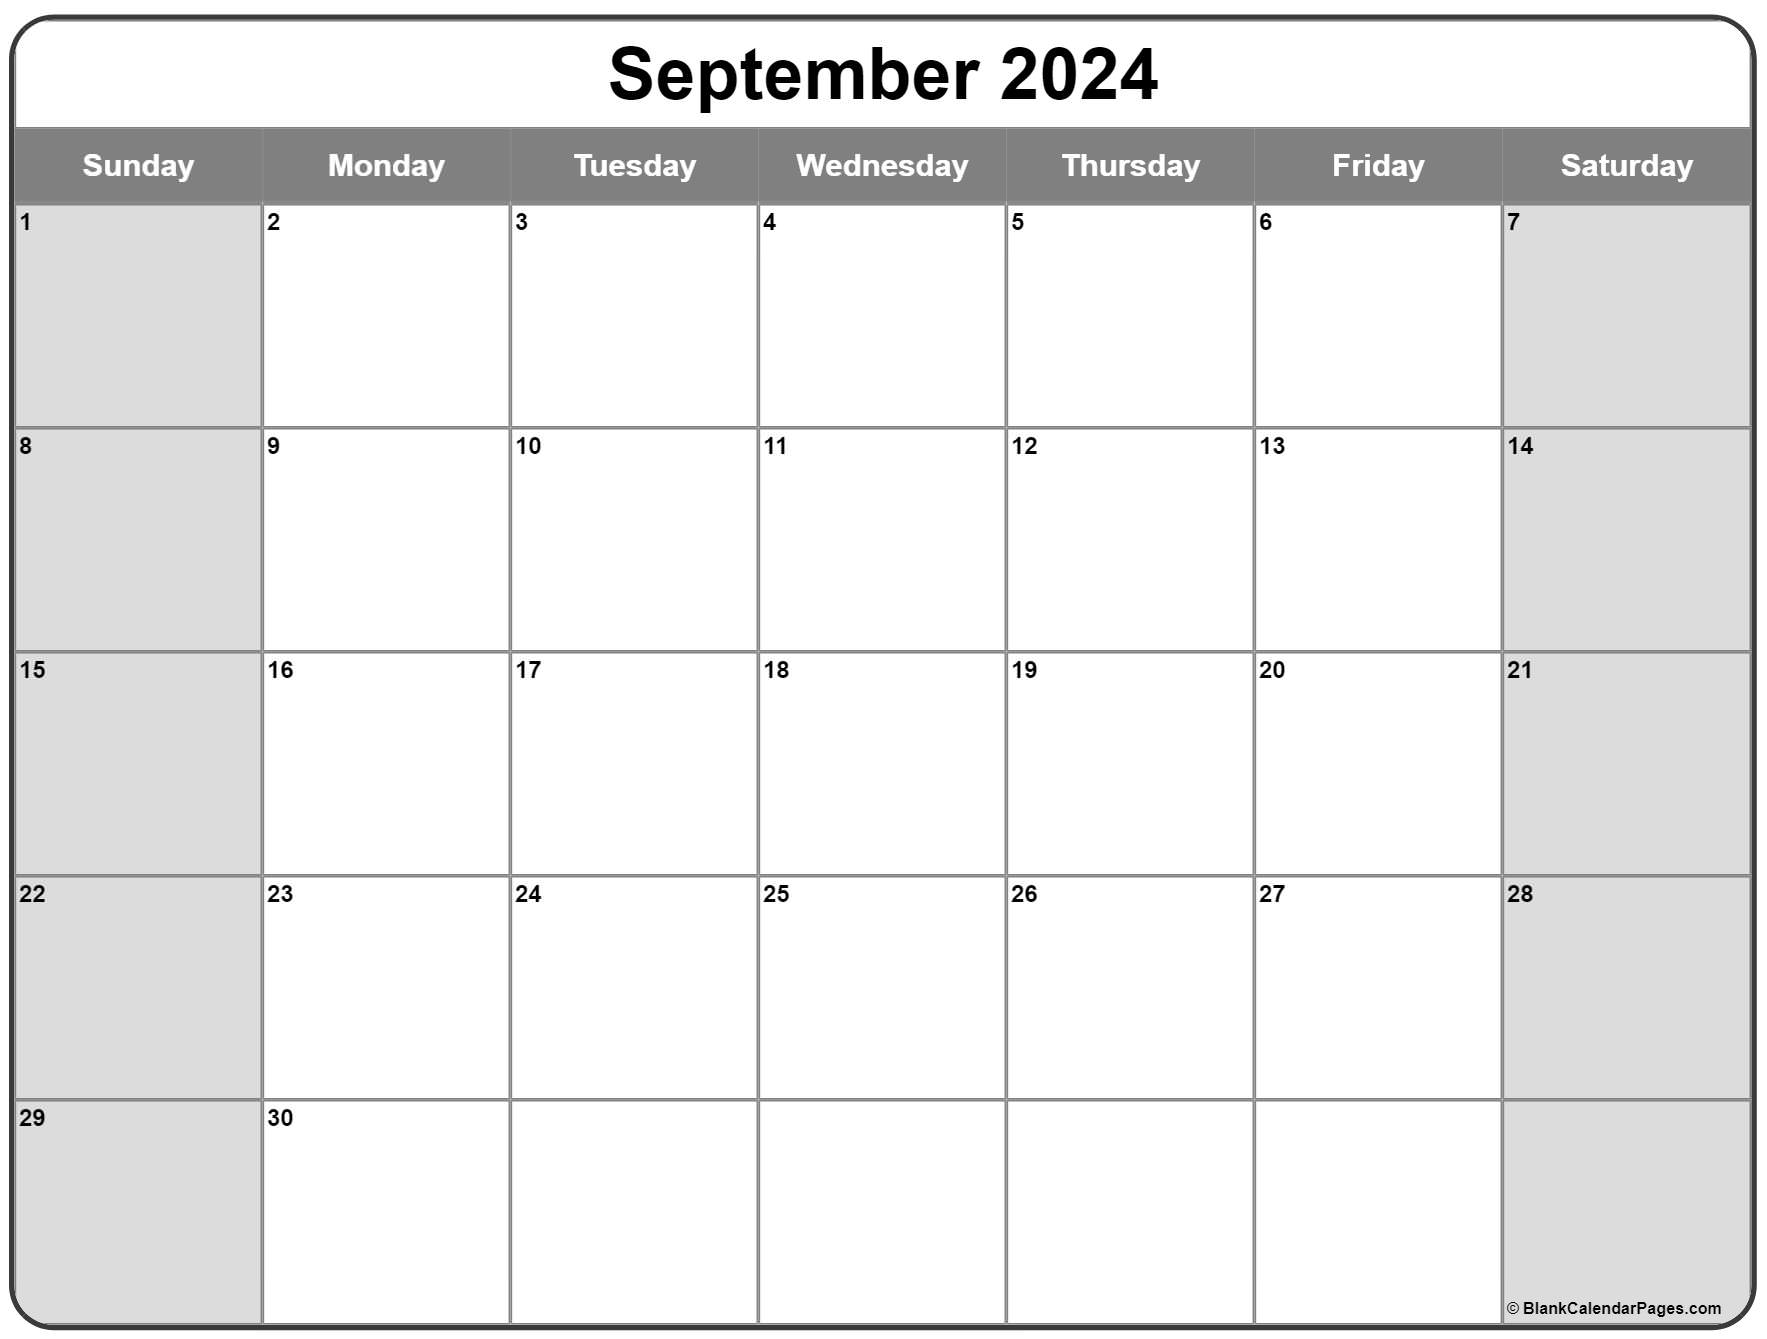 September 2024 calendar free printable calendar